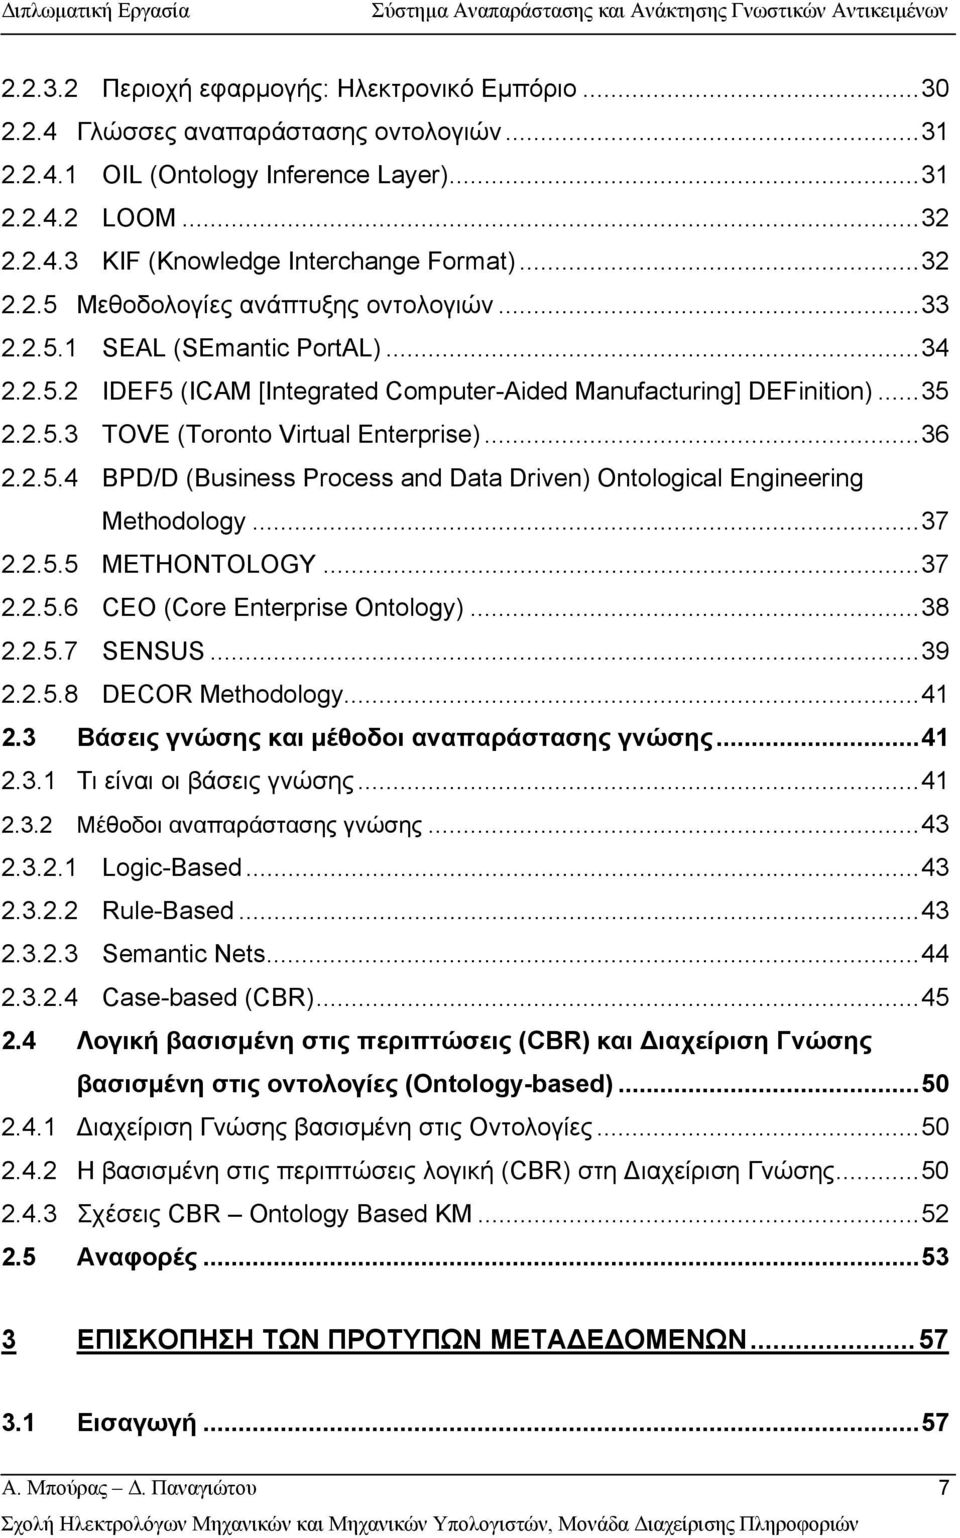 ..36 2.2.5.4 BPD/D (Business Process and Data Driven) Ontological Engineering Methodology...37 2.2.5.5 METHONTOLOGY...37 2.2.5.6 CEO (Core Enterprise Ontology)...38 2.2.5.7 SENSUS...39 2.2.5.8 DECOR Methodology.